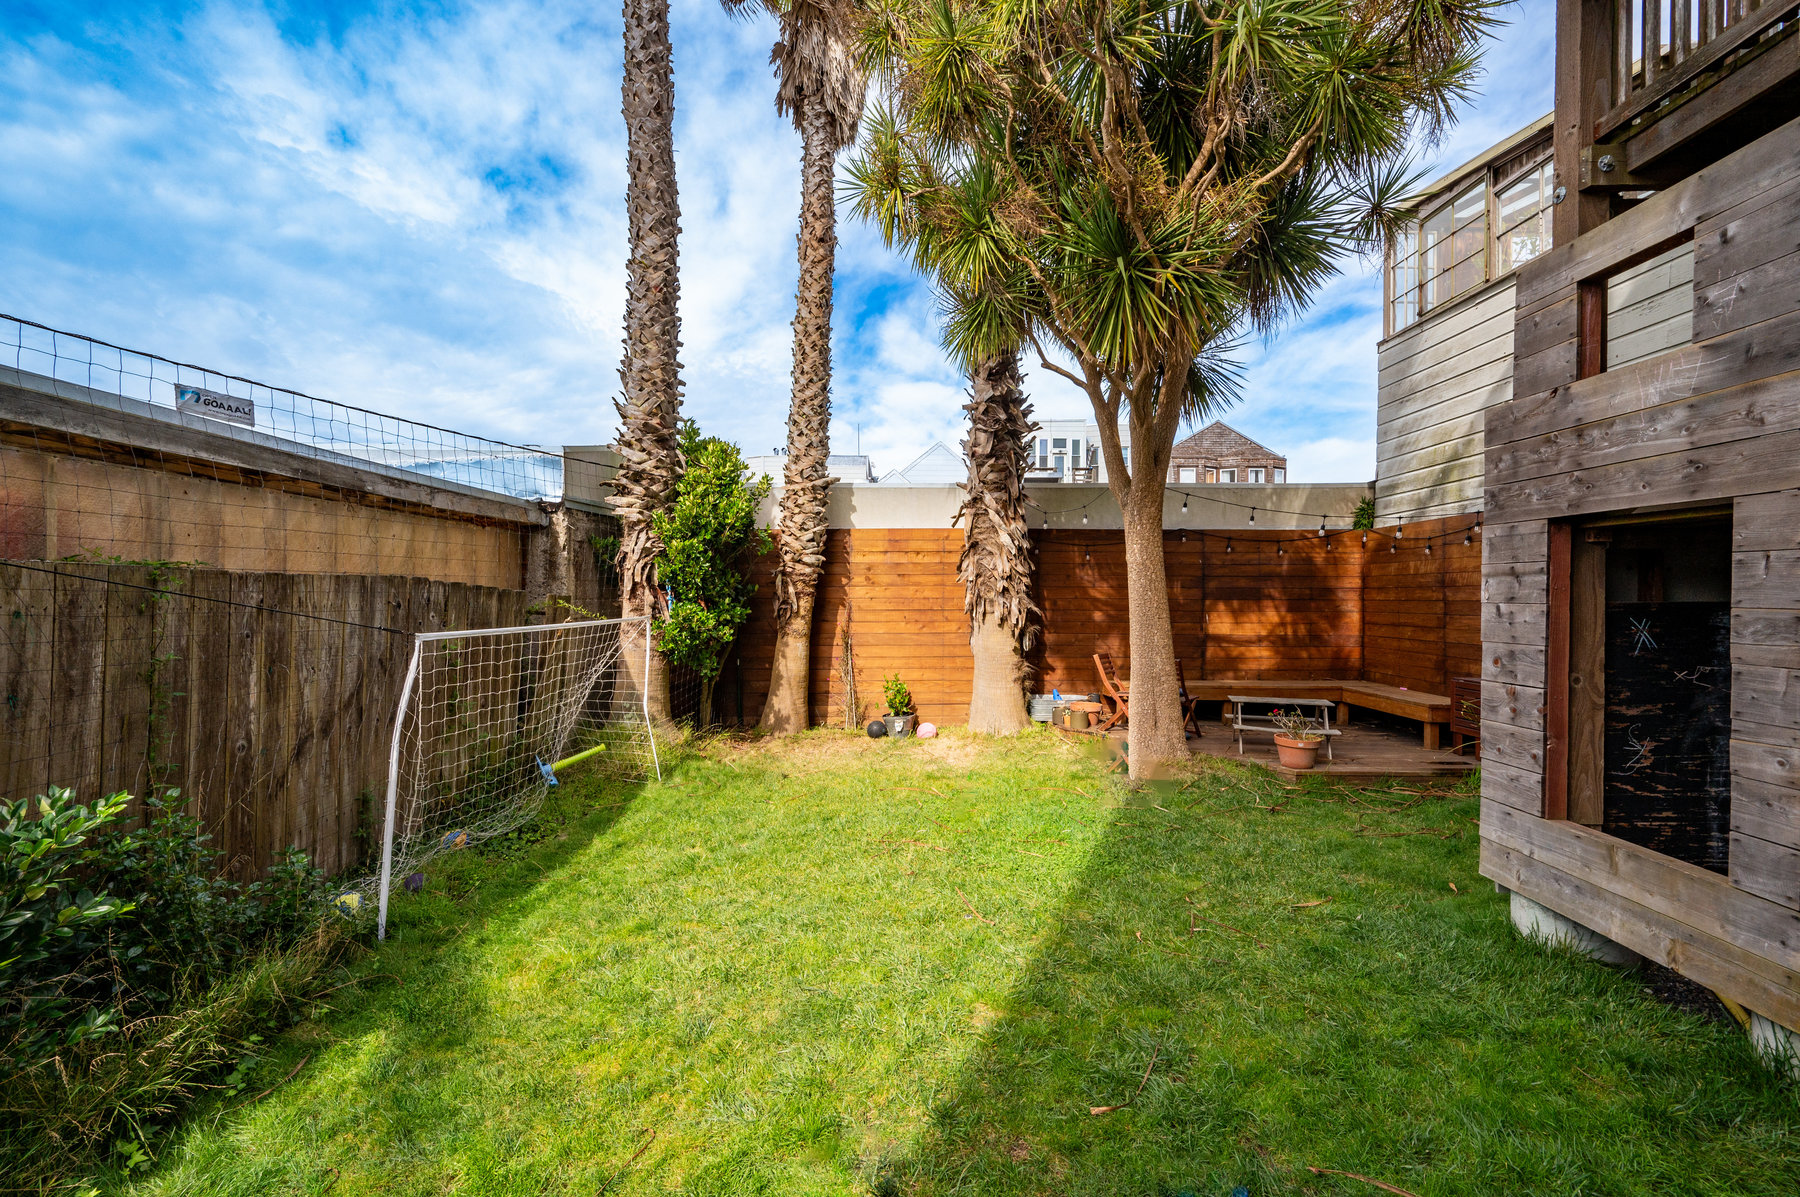 Property Photo: Photo of shared backyard highlighting the green grass yard. 